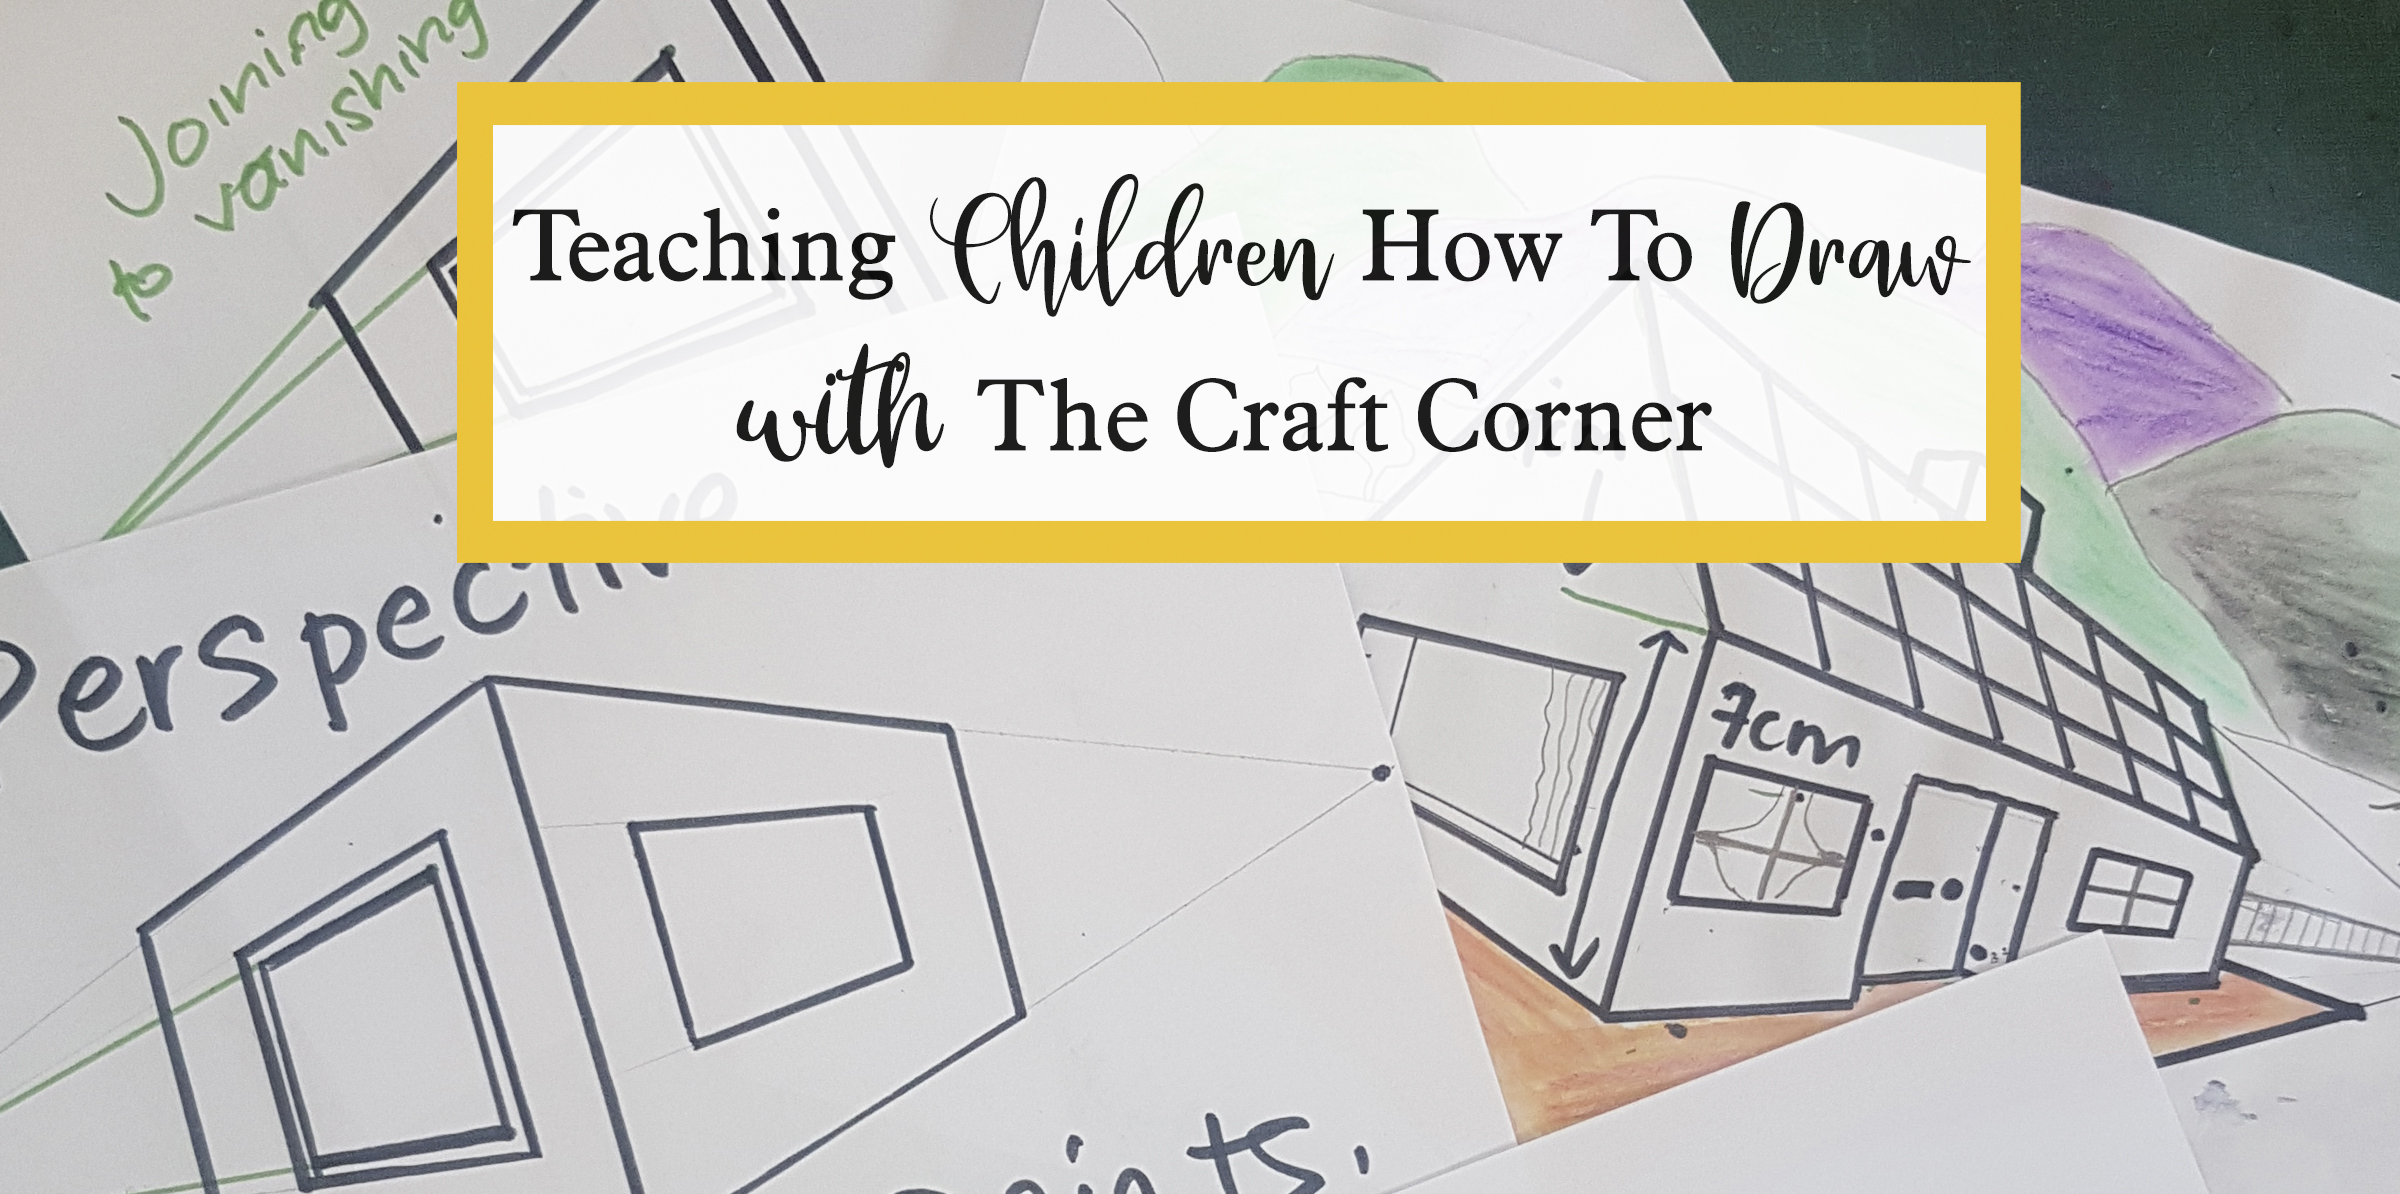 Teaching Children How to Draw